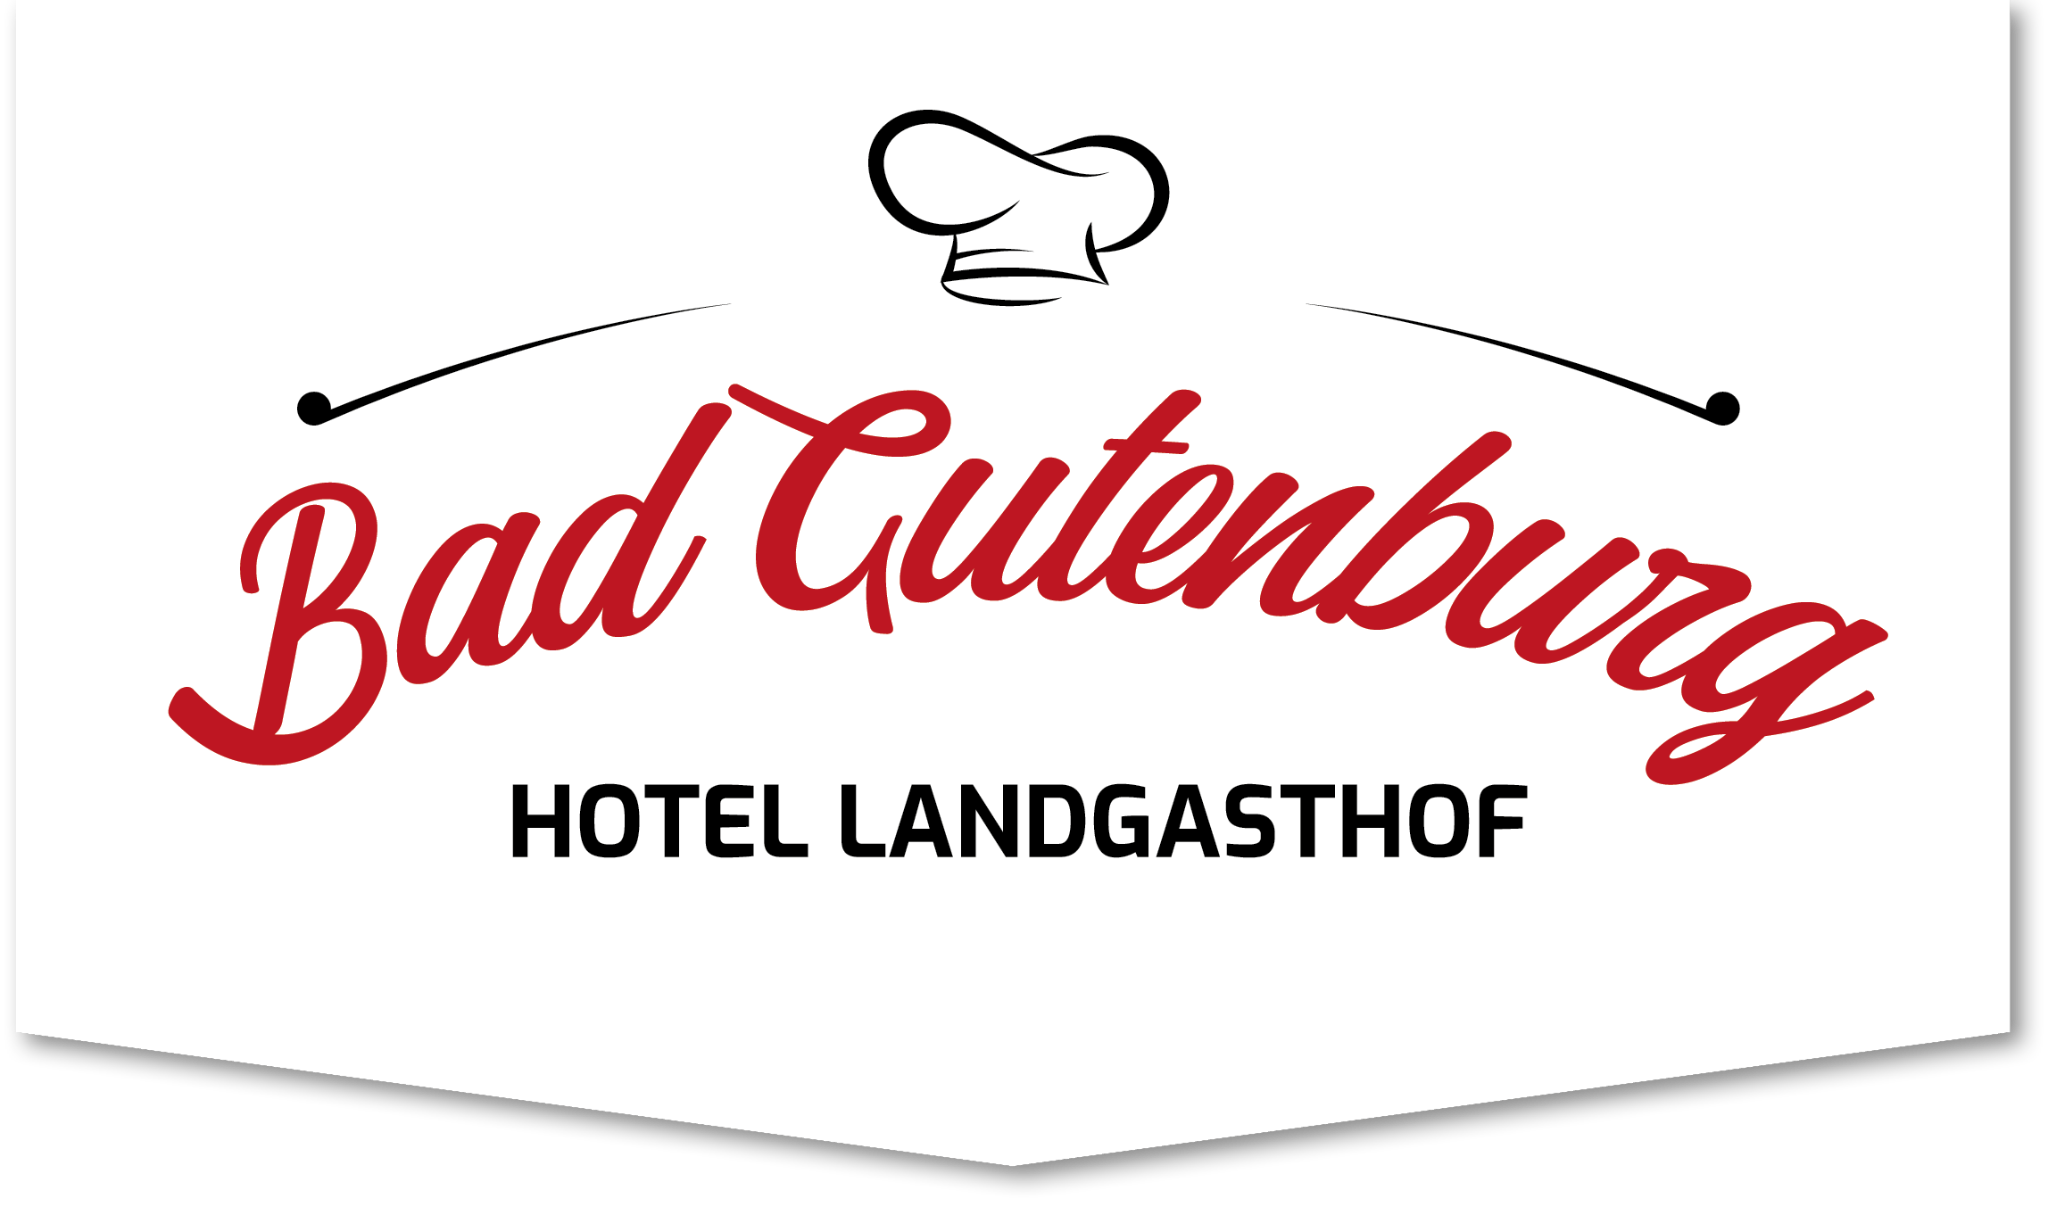 Landgasthof Bad Gutenburg